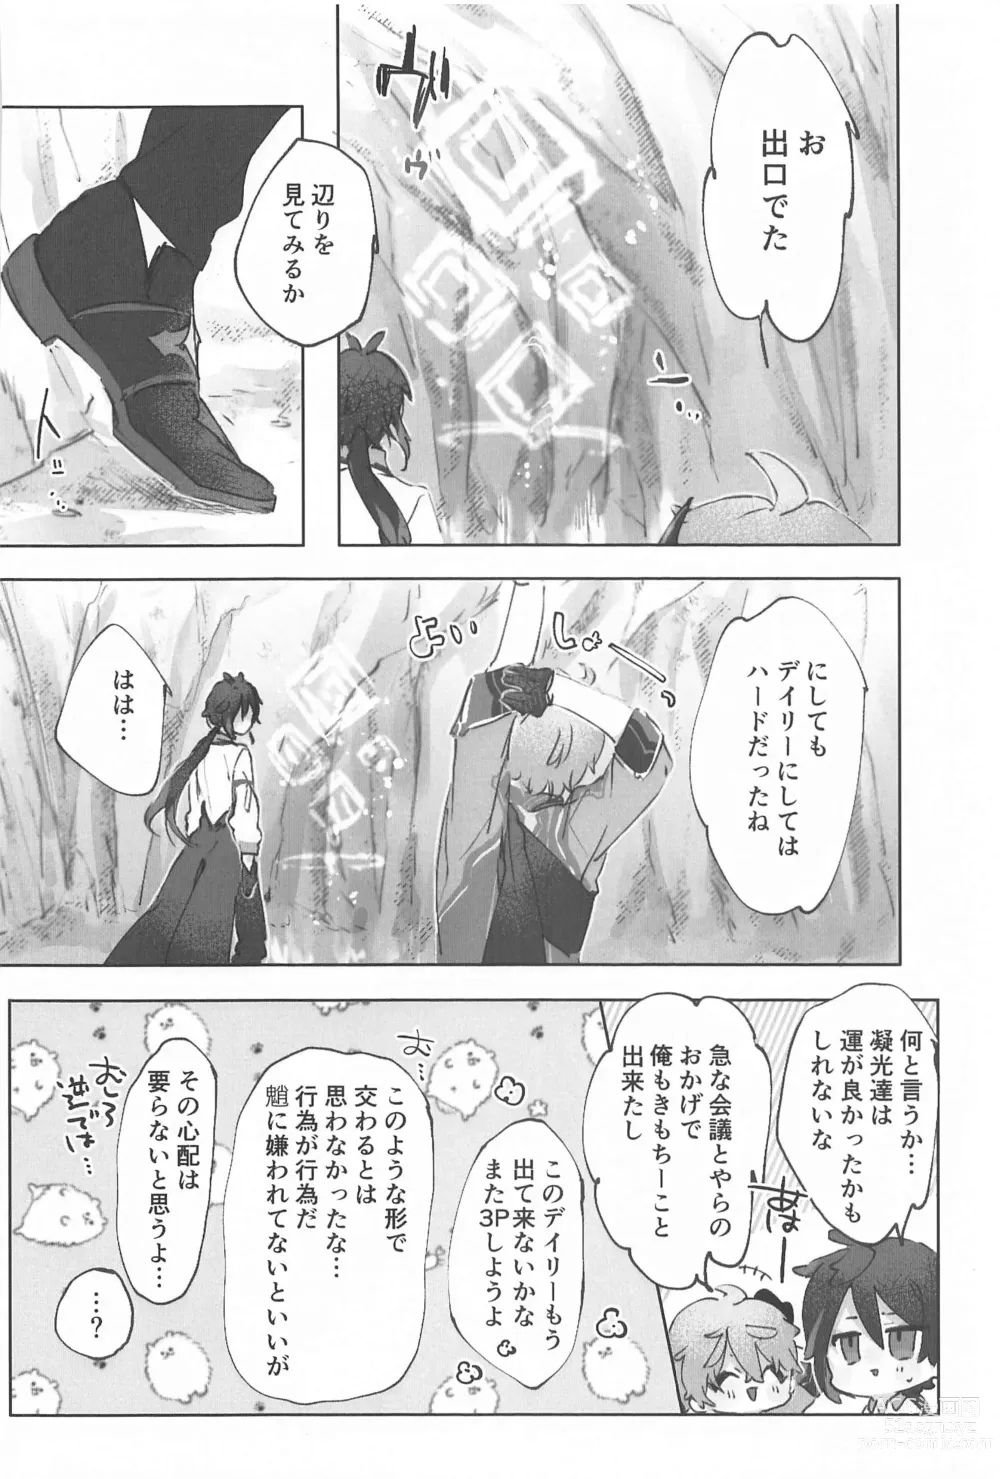 Page 44 of doujinshi Okawari.